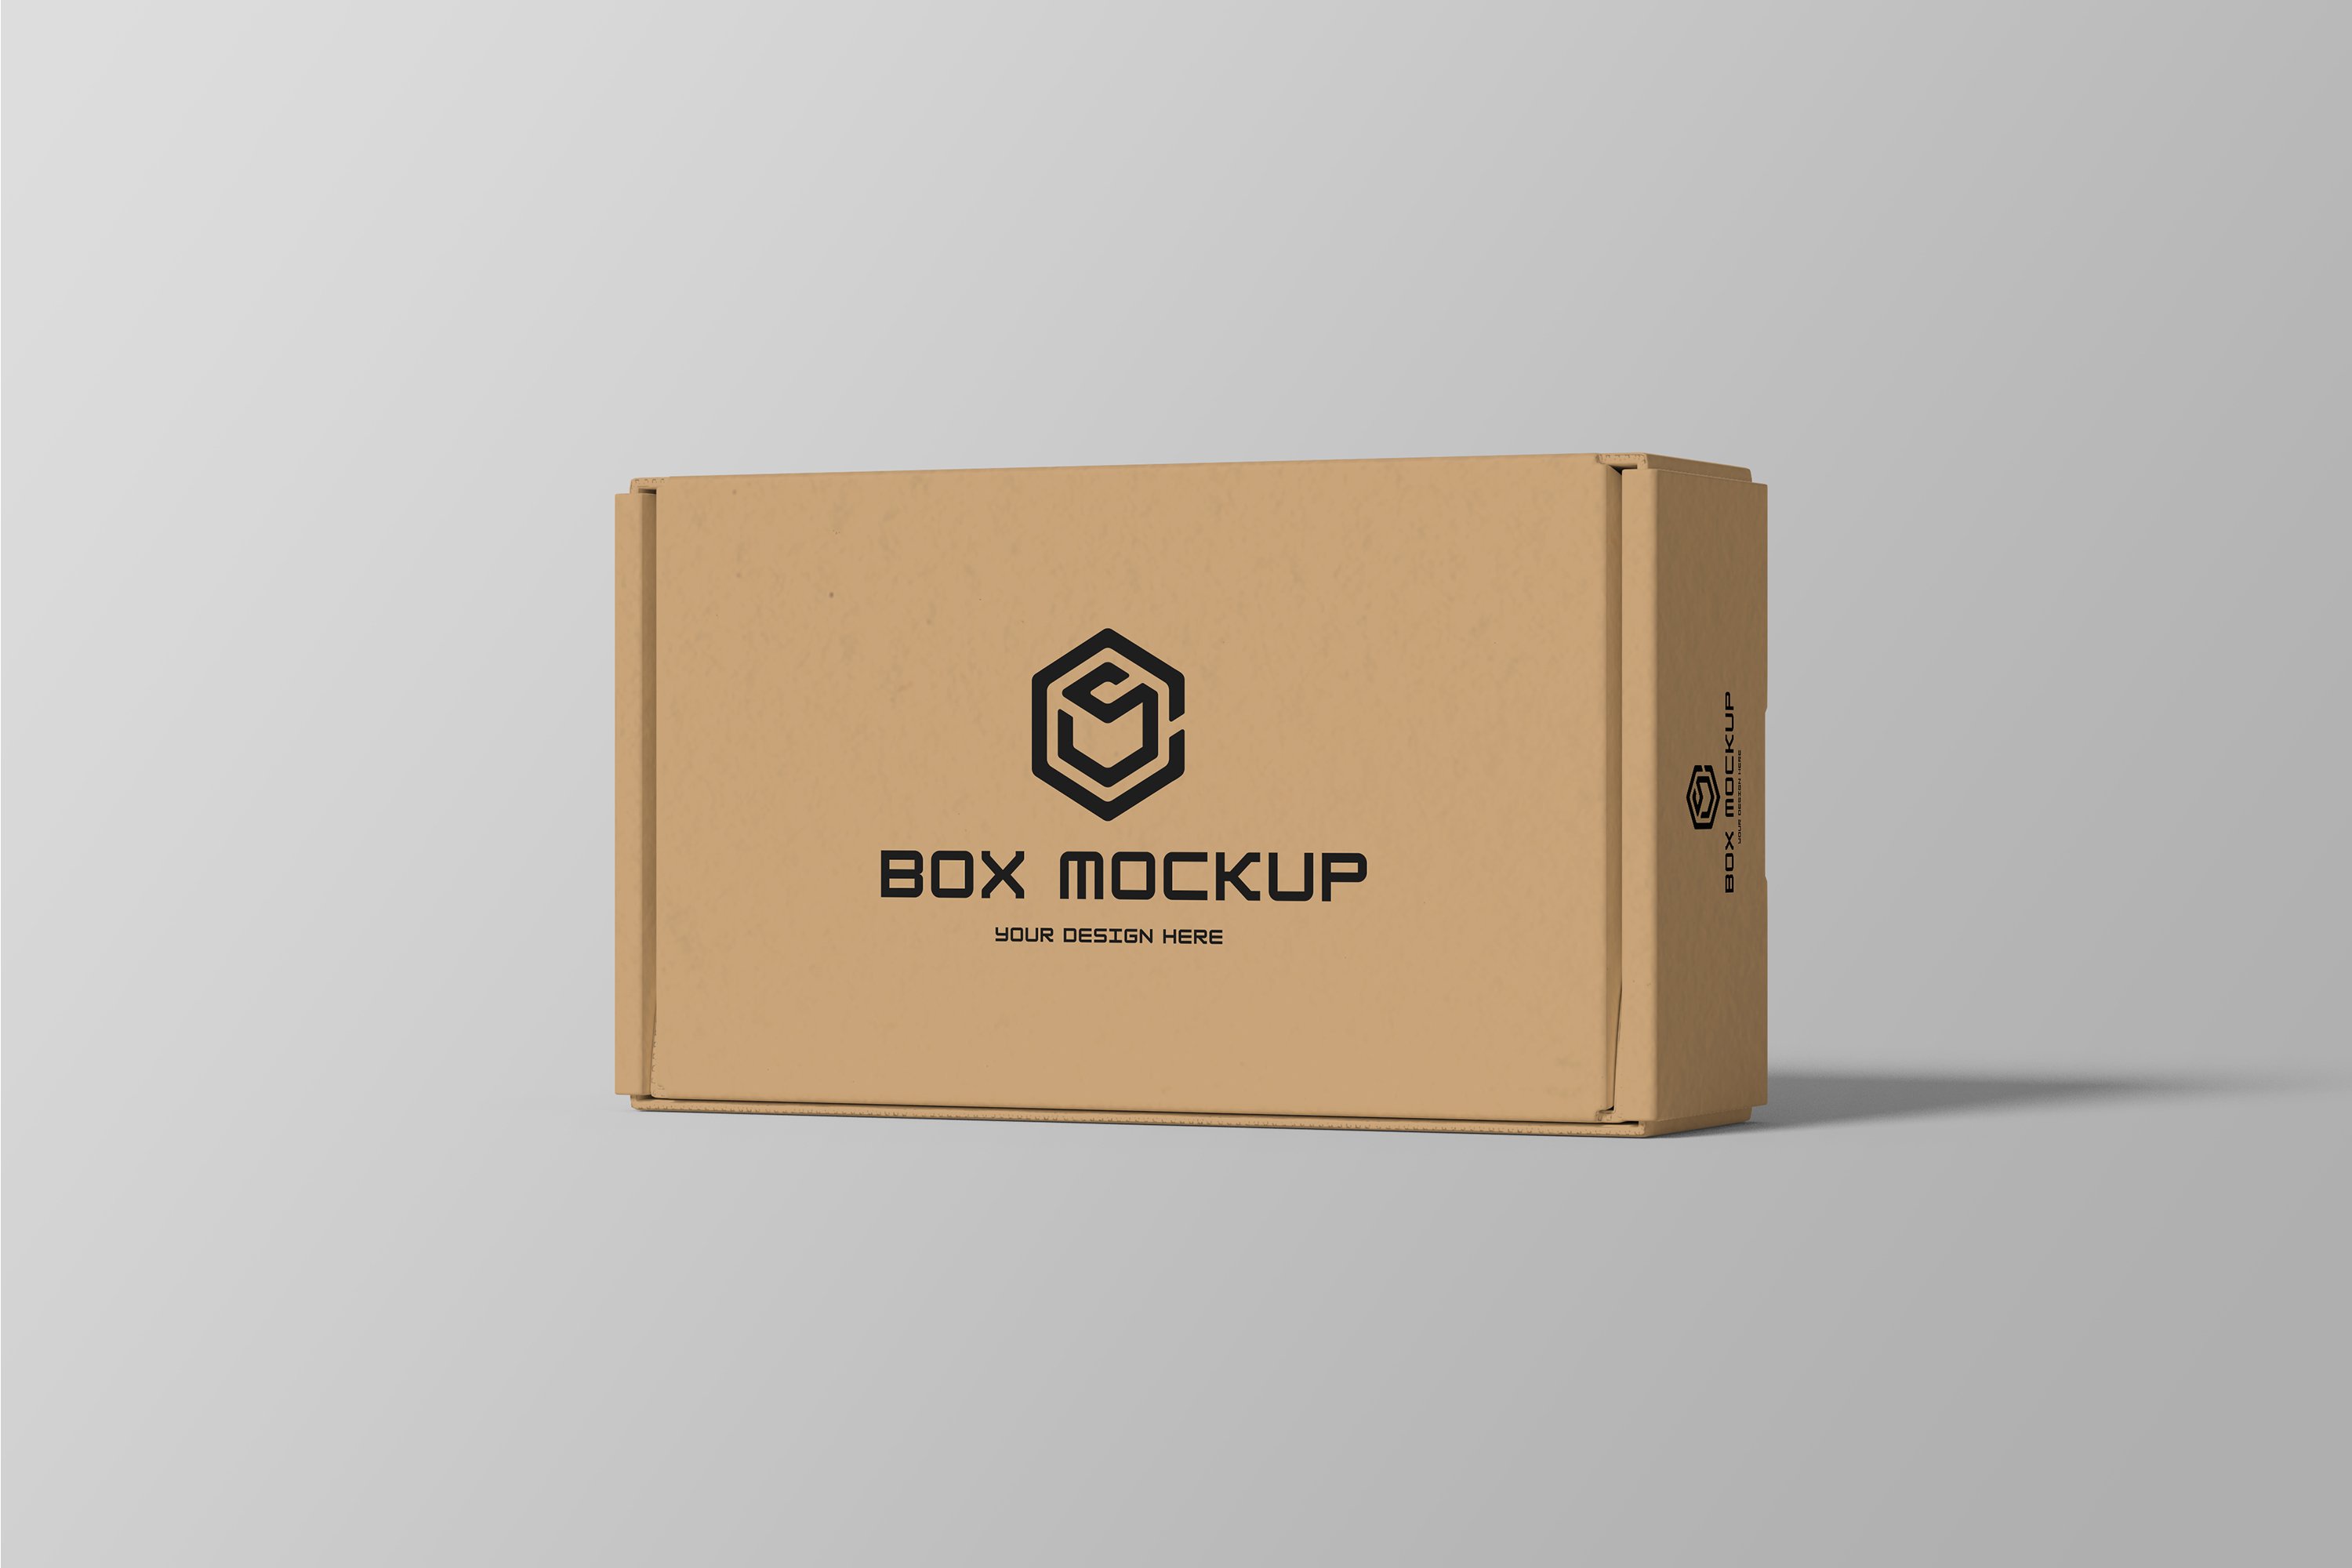 Box Mockup preview image.